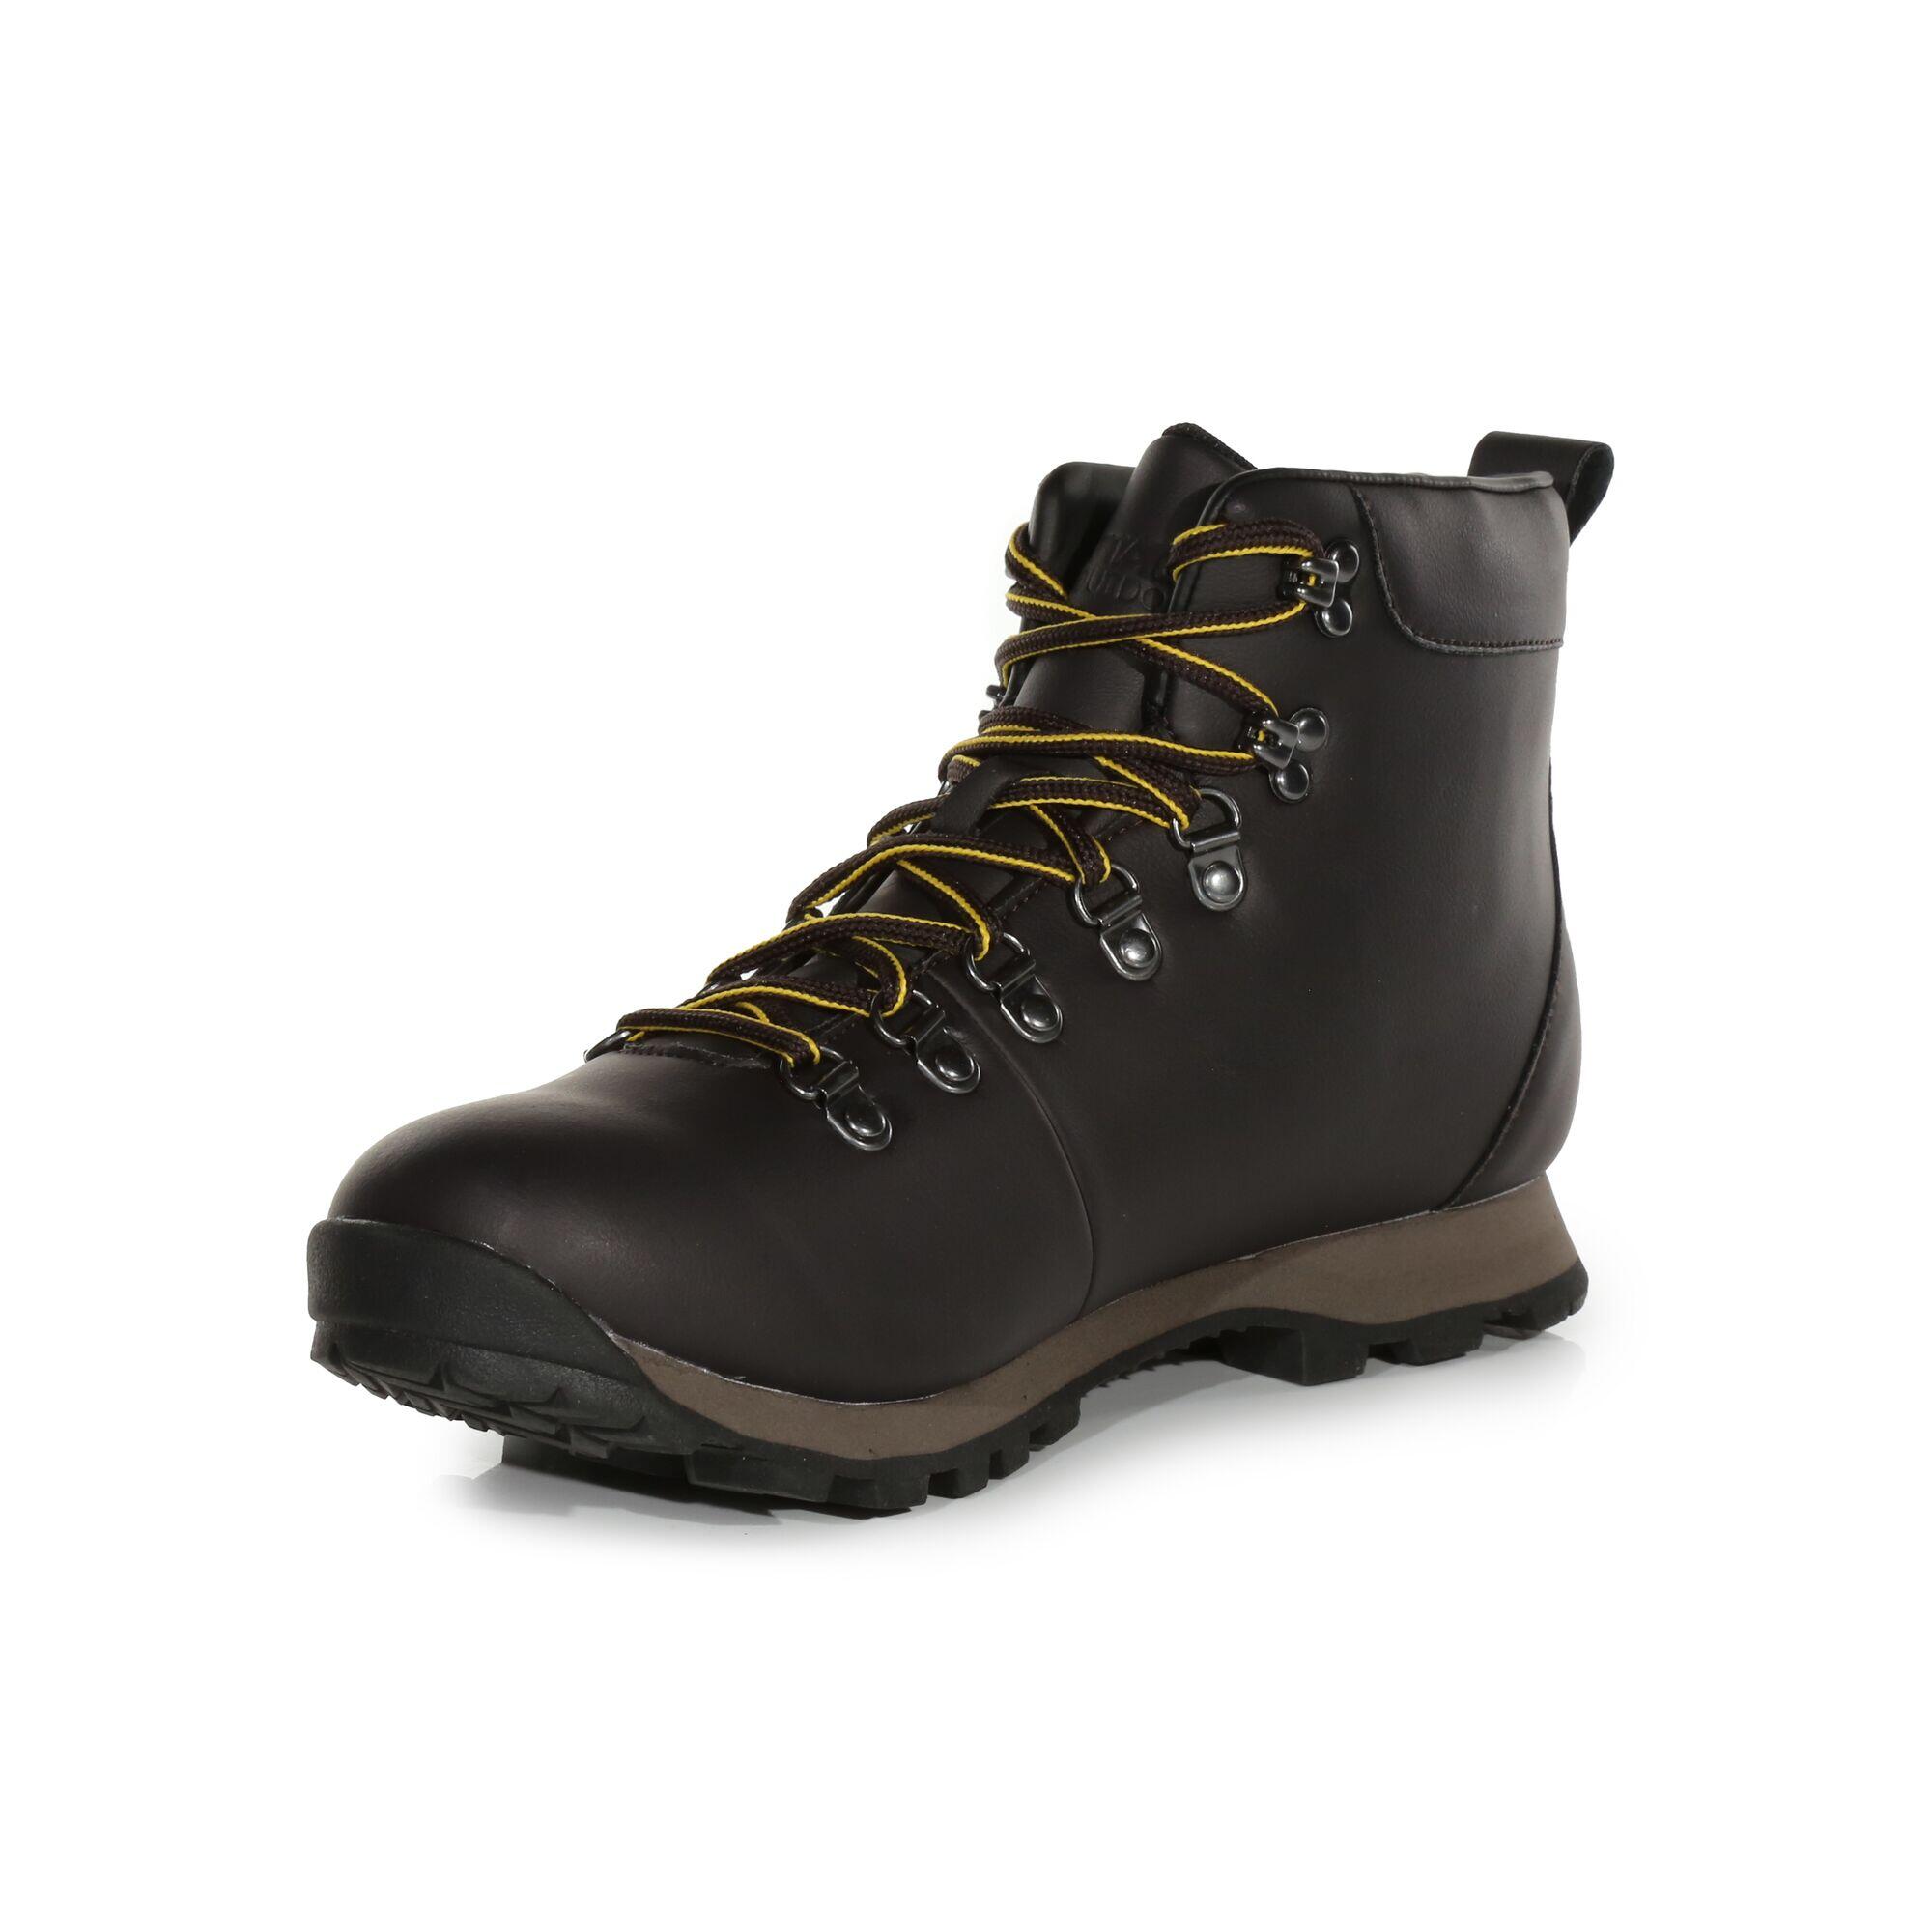 Men's Cypress Evo Leather Walking Boots 2/5